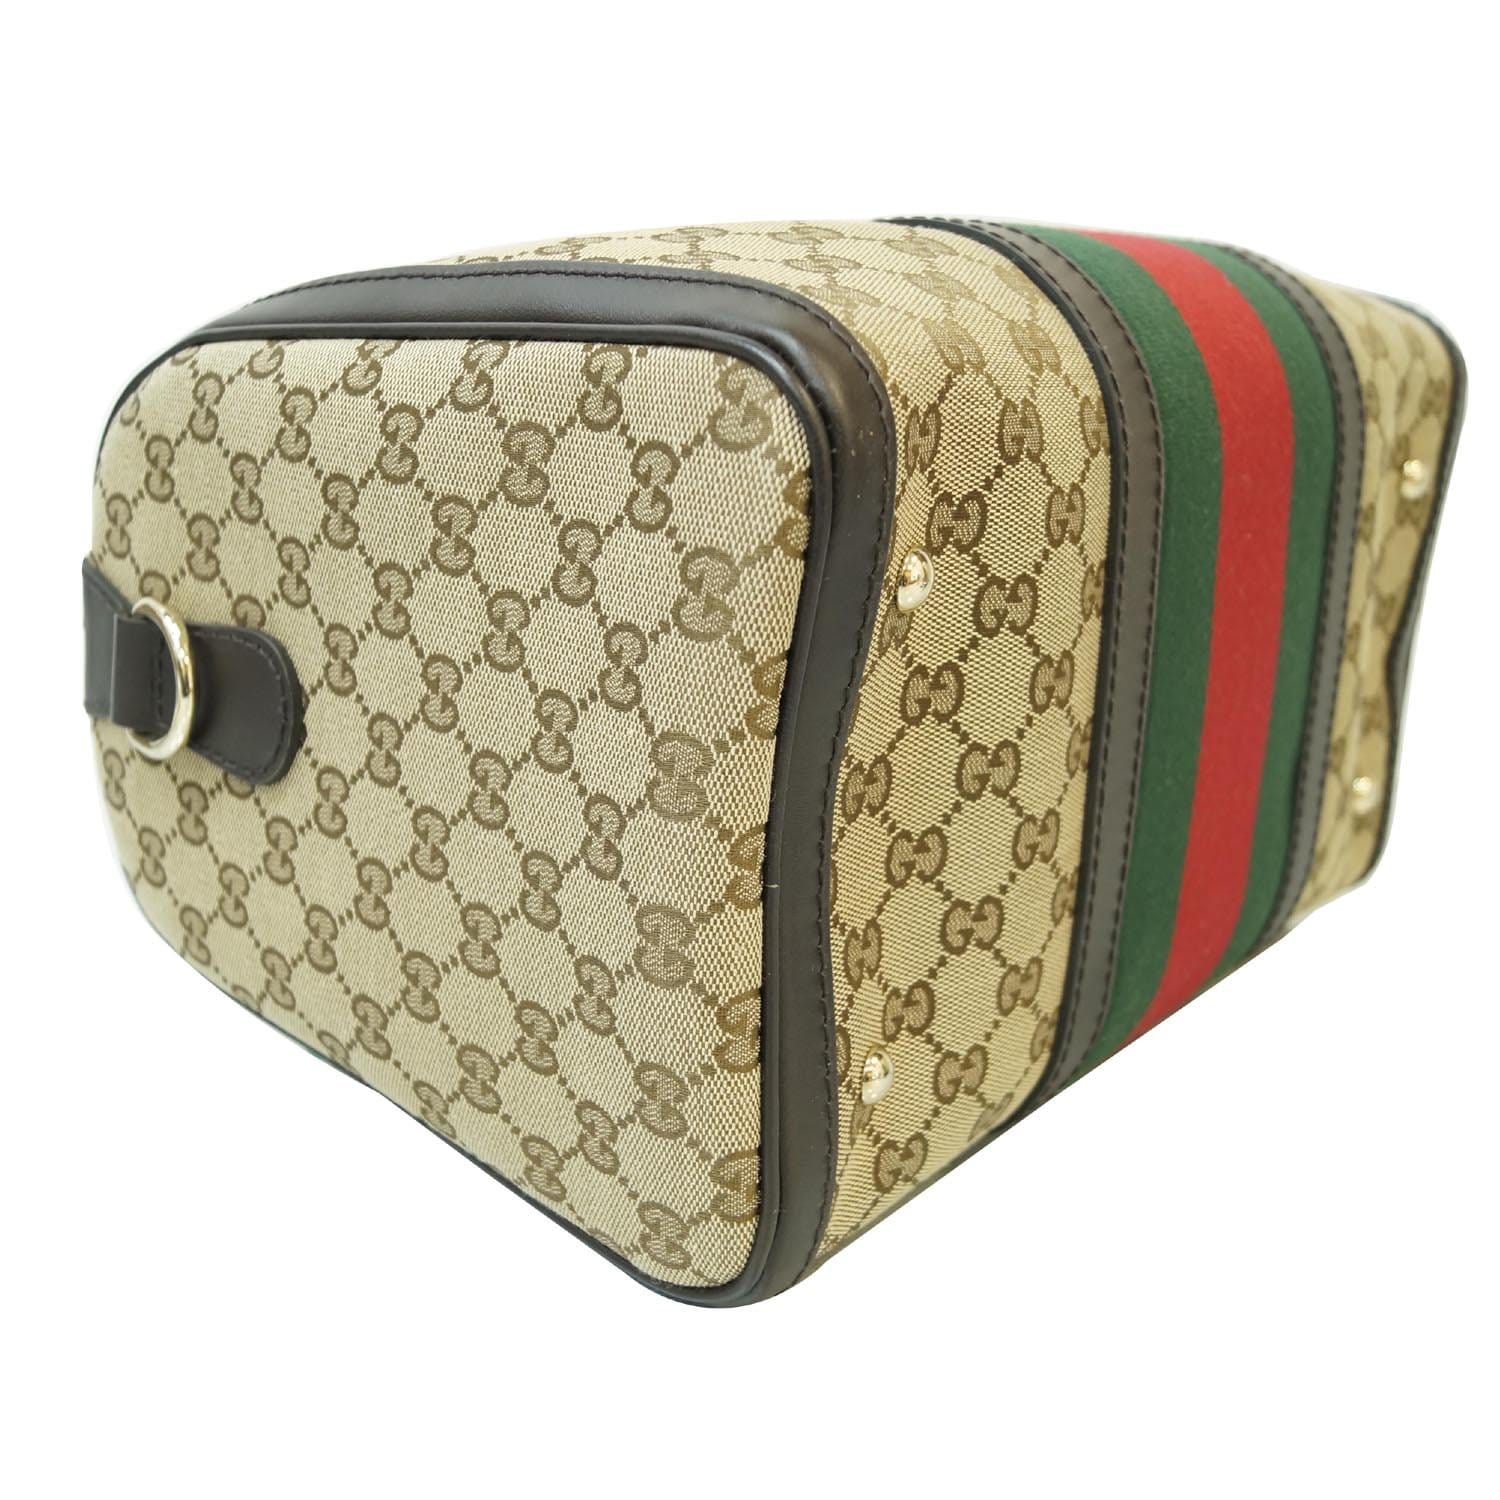 Authentic Gucci Vintage Web Boston Bag - MINT condition!, Luxury